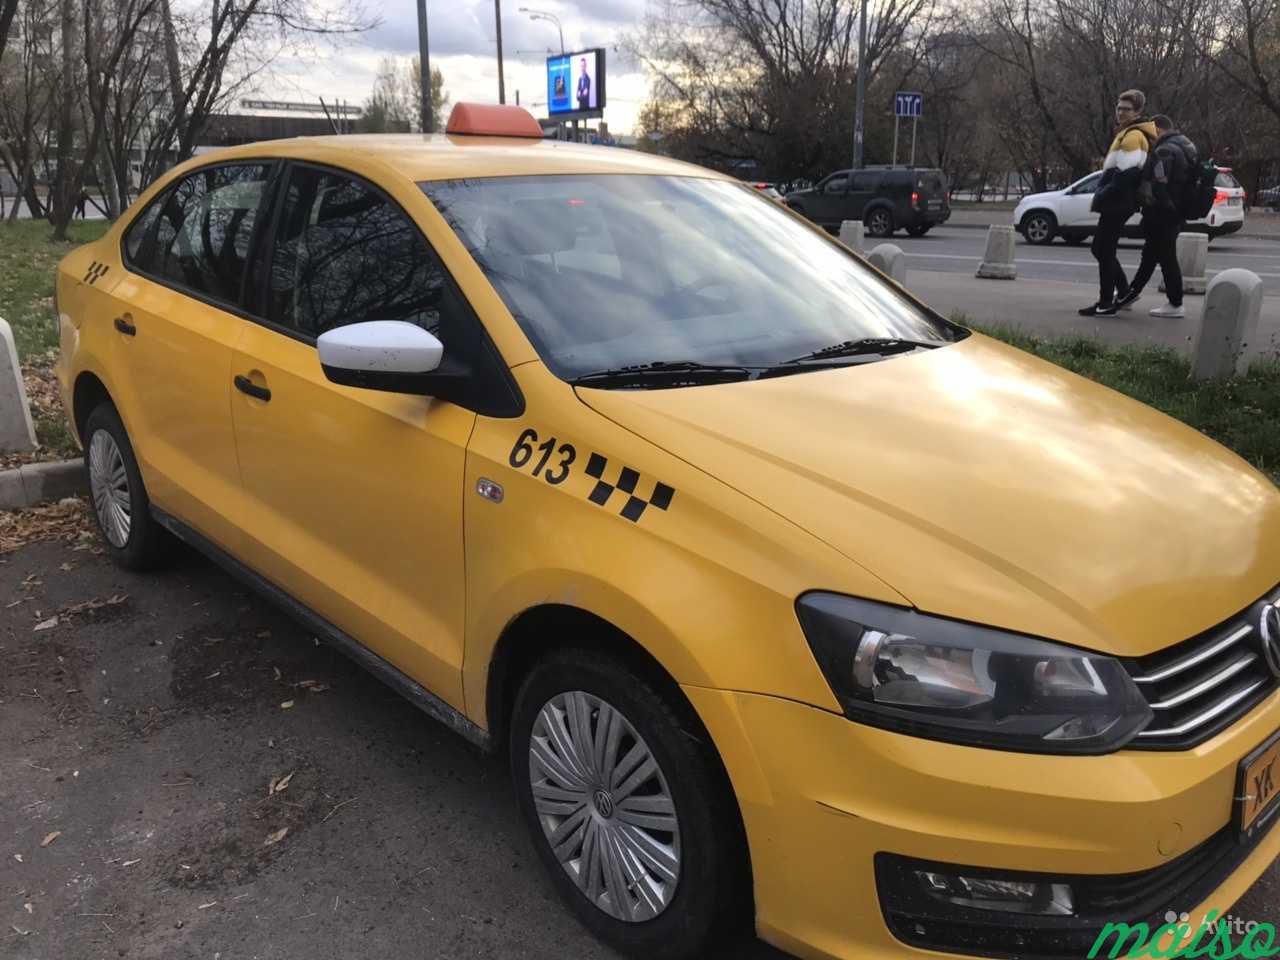 Аренда автомобиля такси в Москве. Фото 3